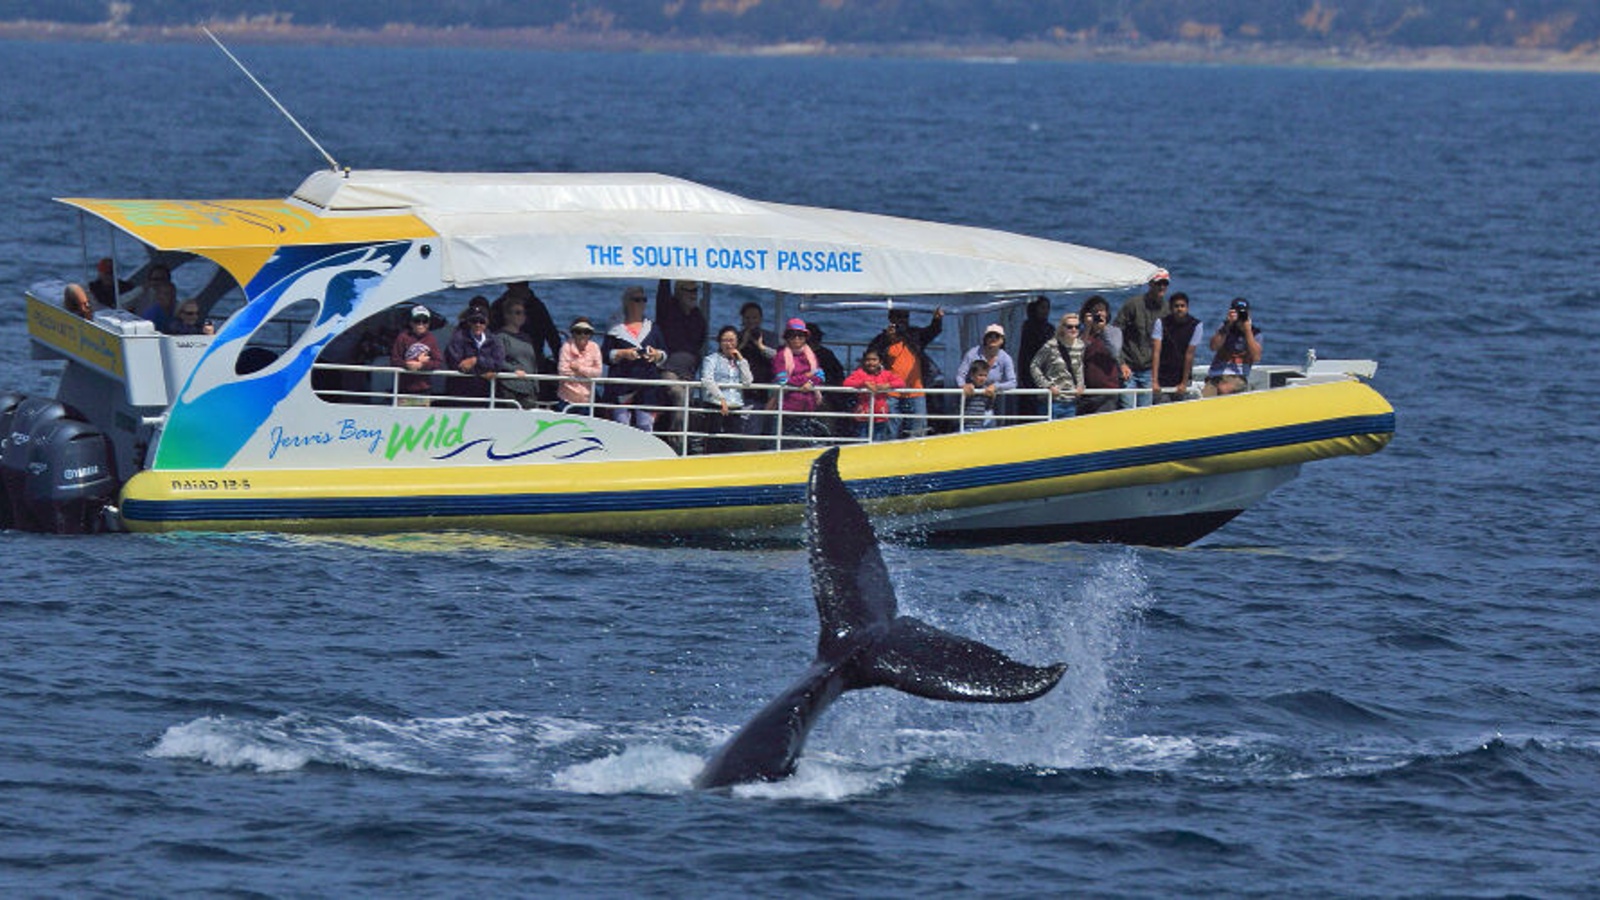 Jervis Bay Wild Eco Cruise